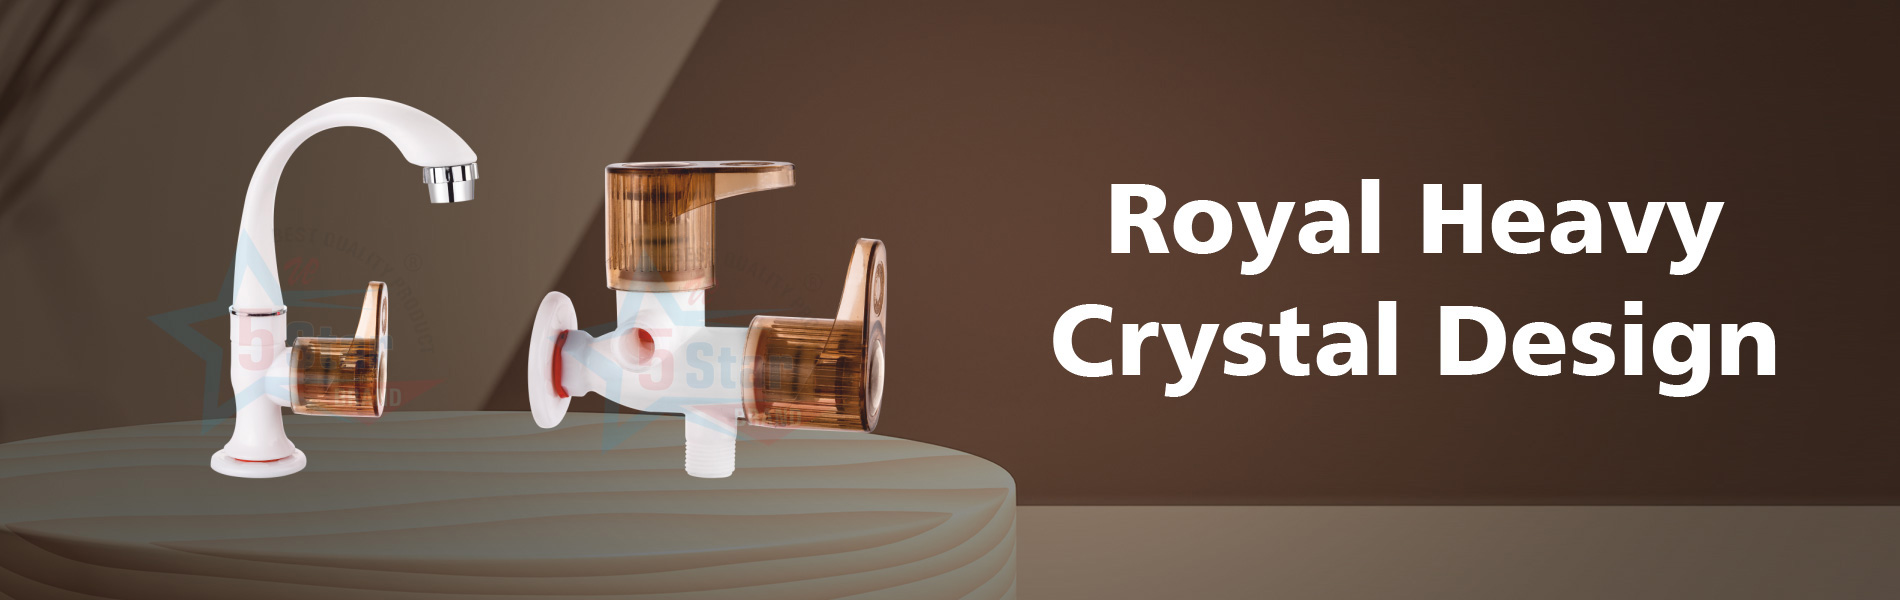 Royal-Heavy-Crystal-Design